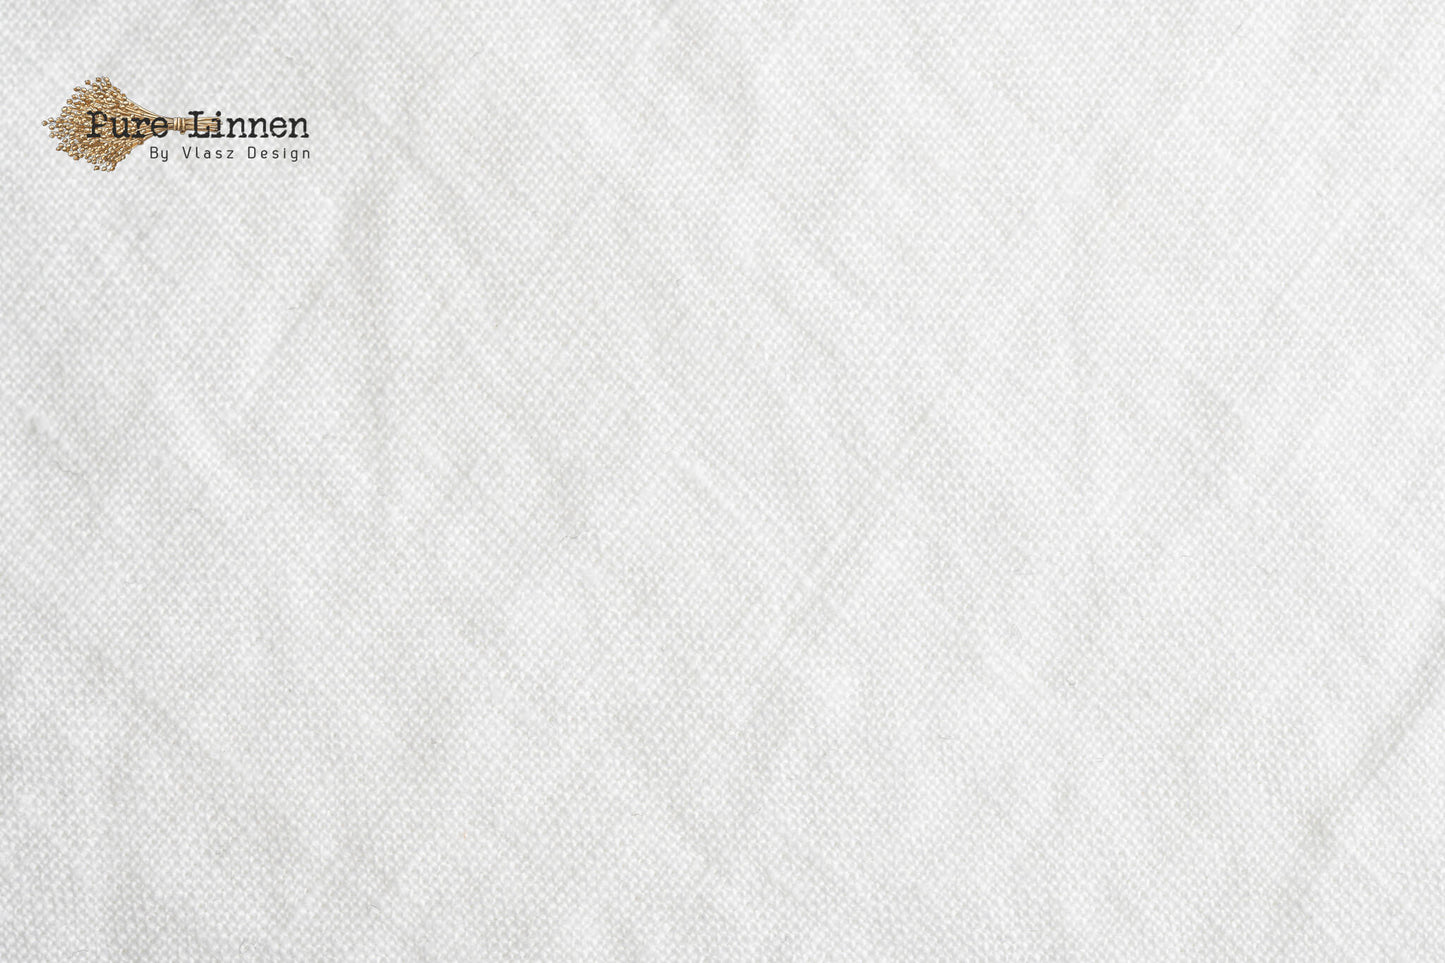 Linen Pillowcase White/Tuck-in Strip - Pure Linen